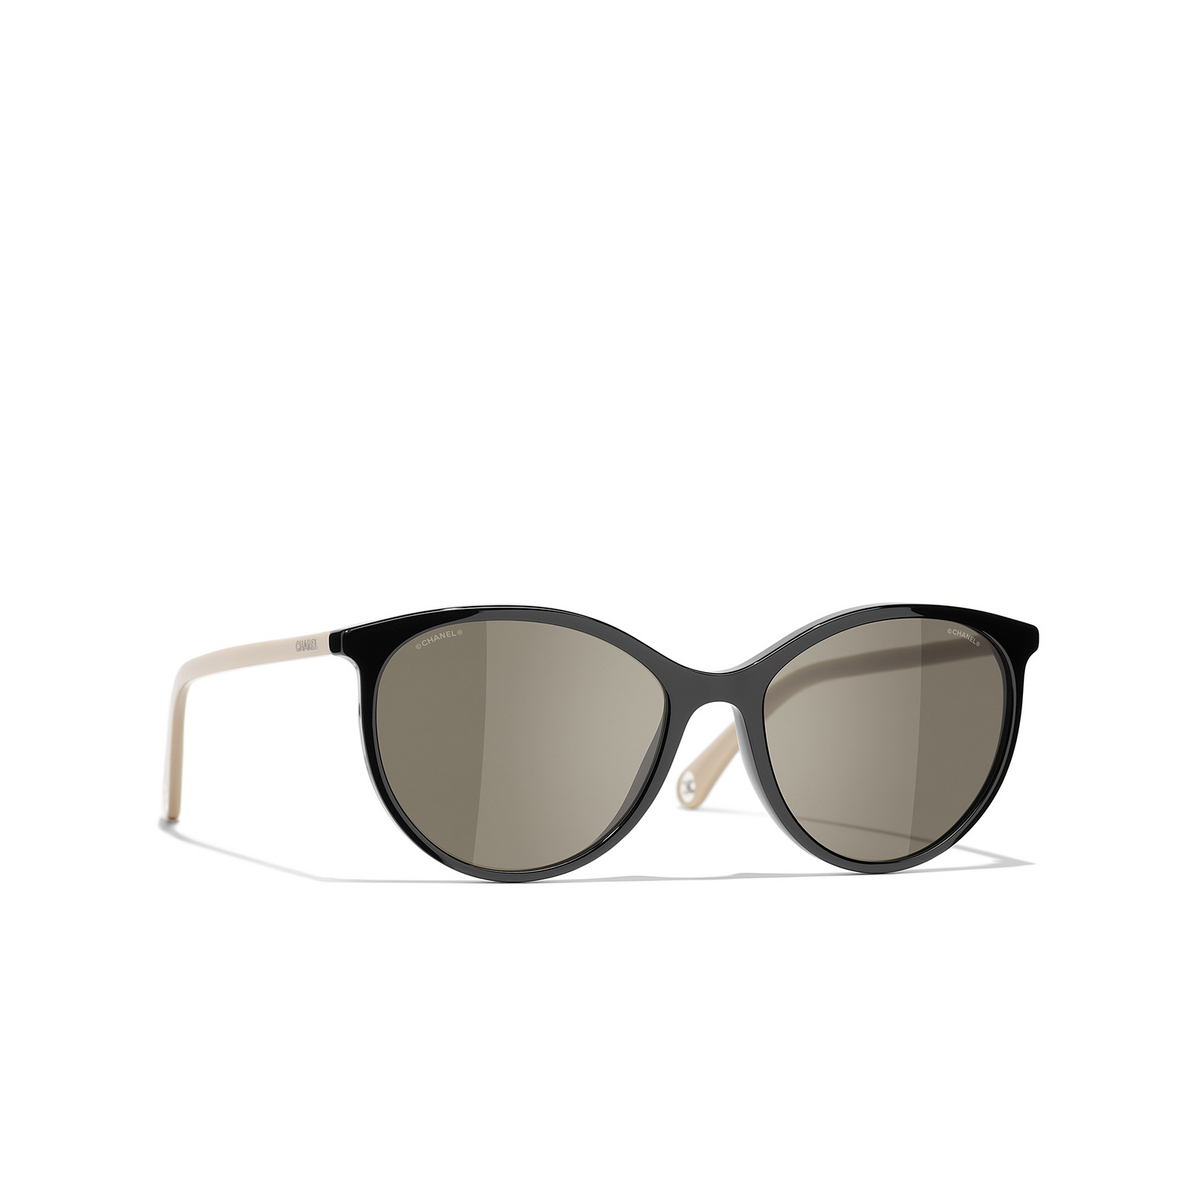 CHANEL pantos Sunglasses C942/3 Black & Beige - three-quarters view